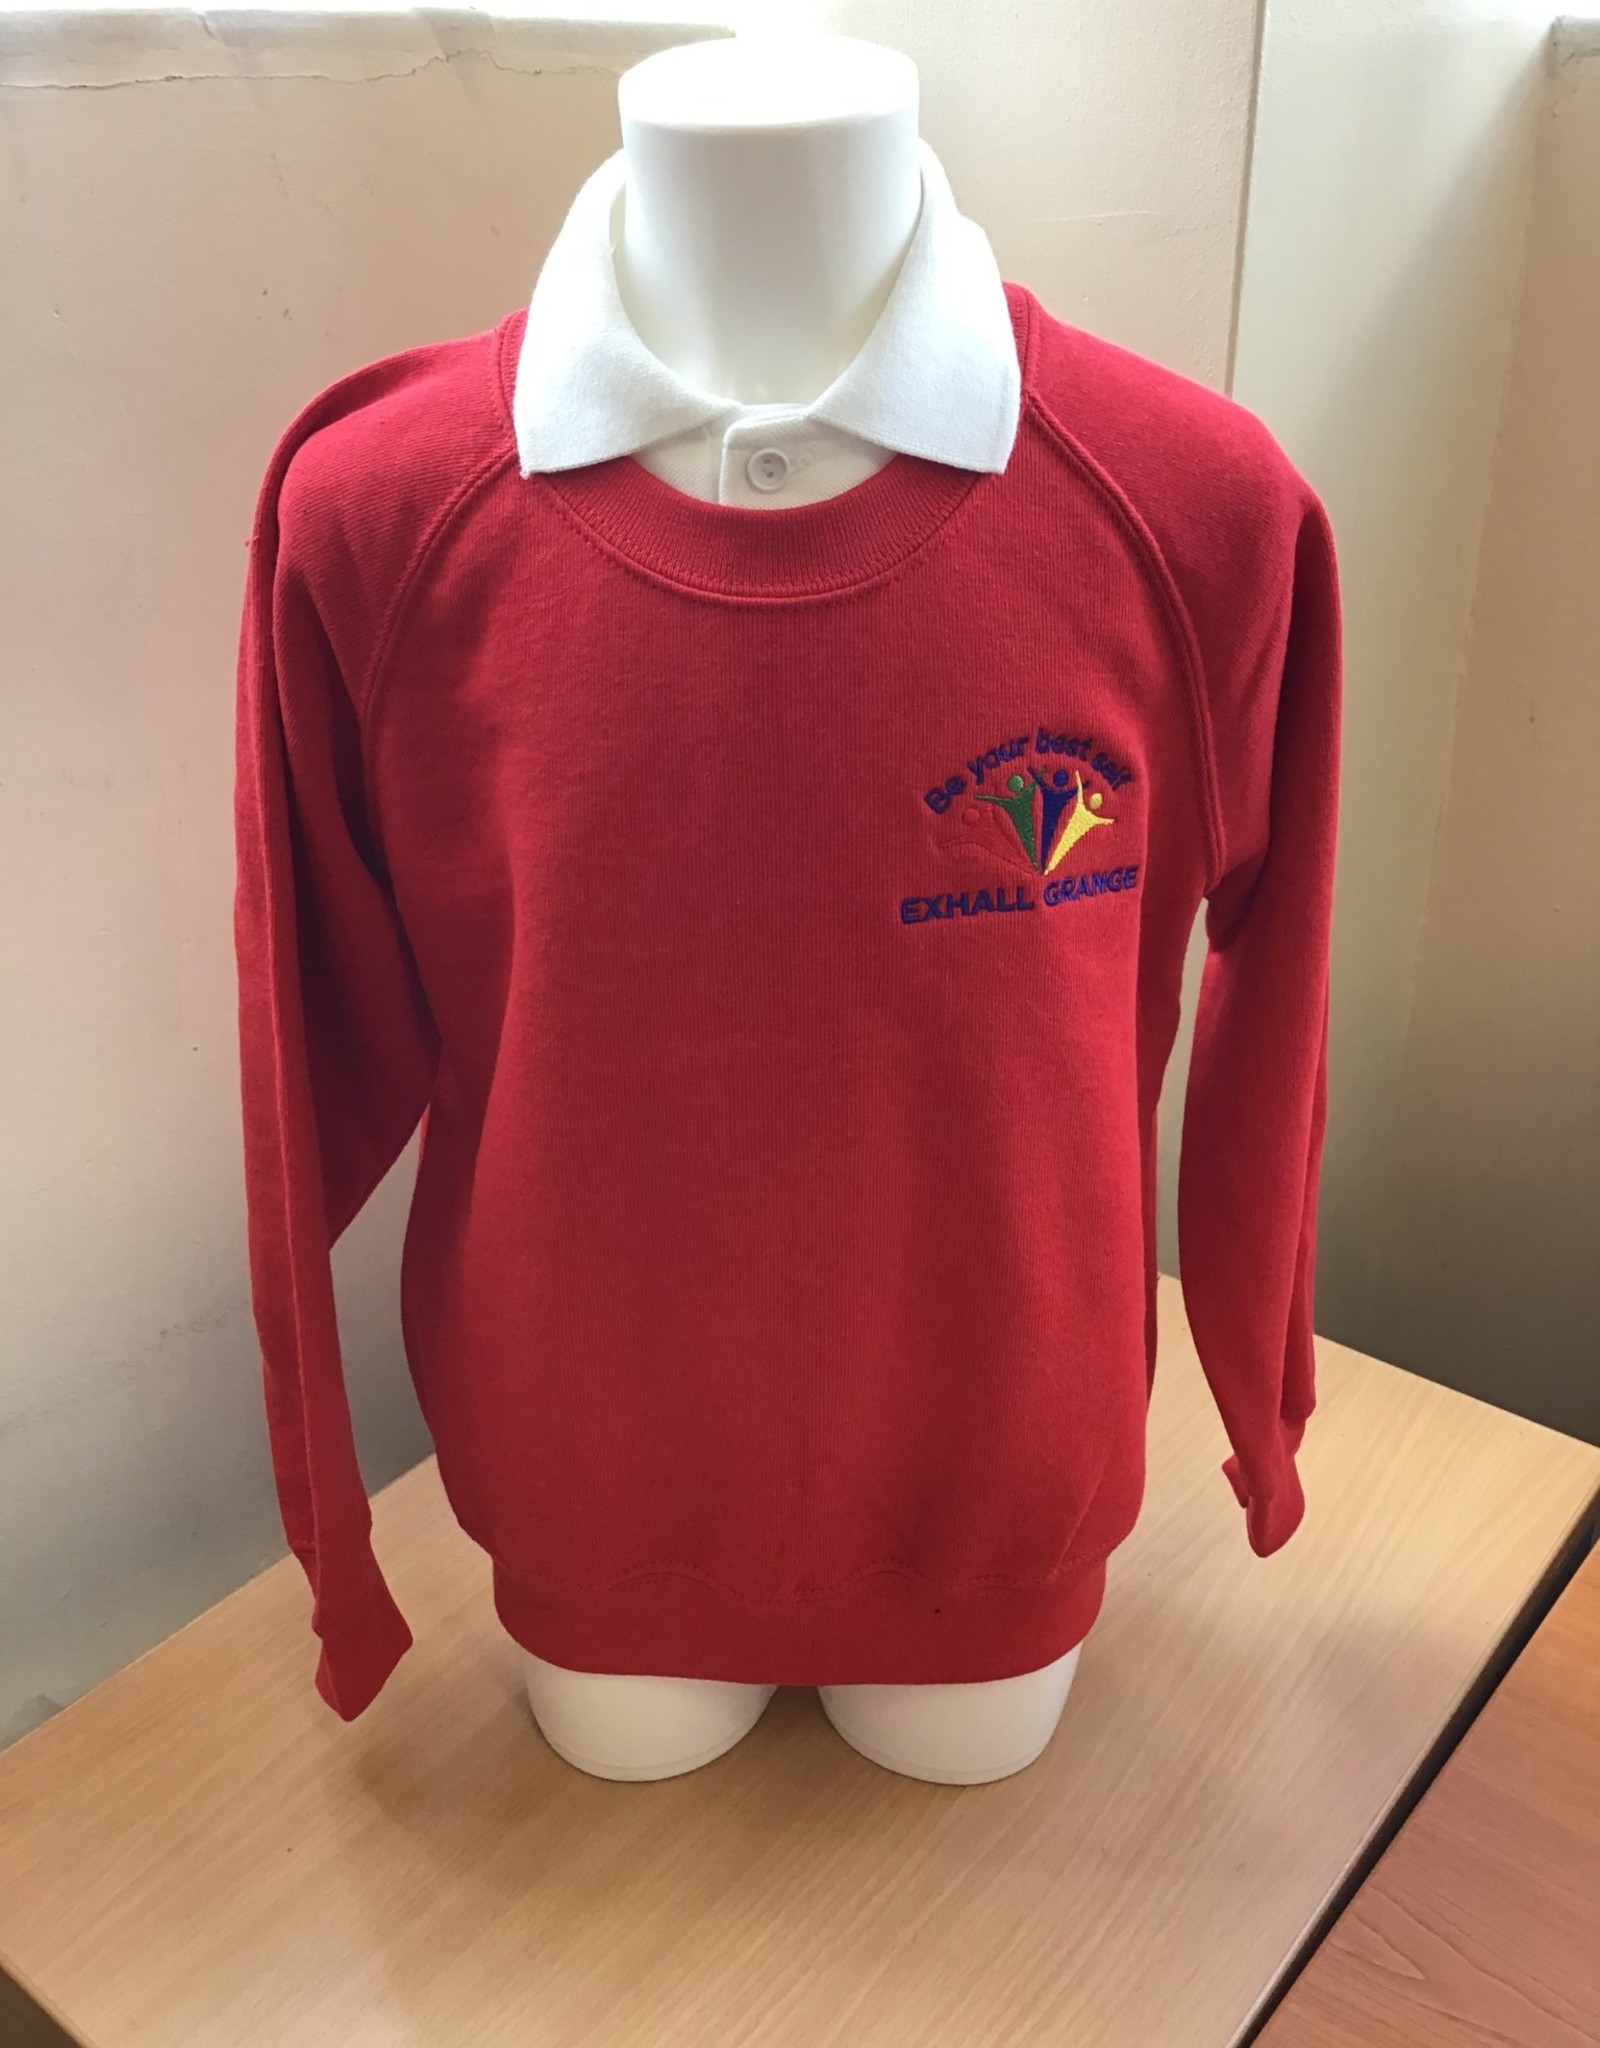 BANNER Sweatshirt Primary Child Size - Exhall Grange